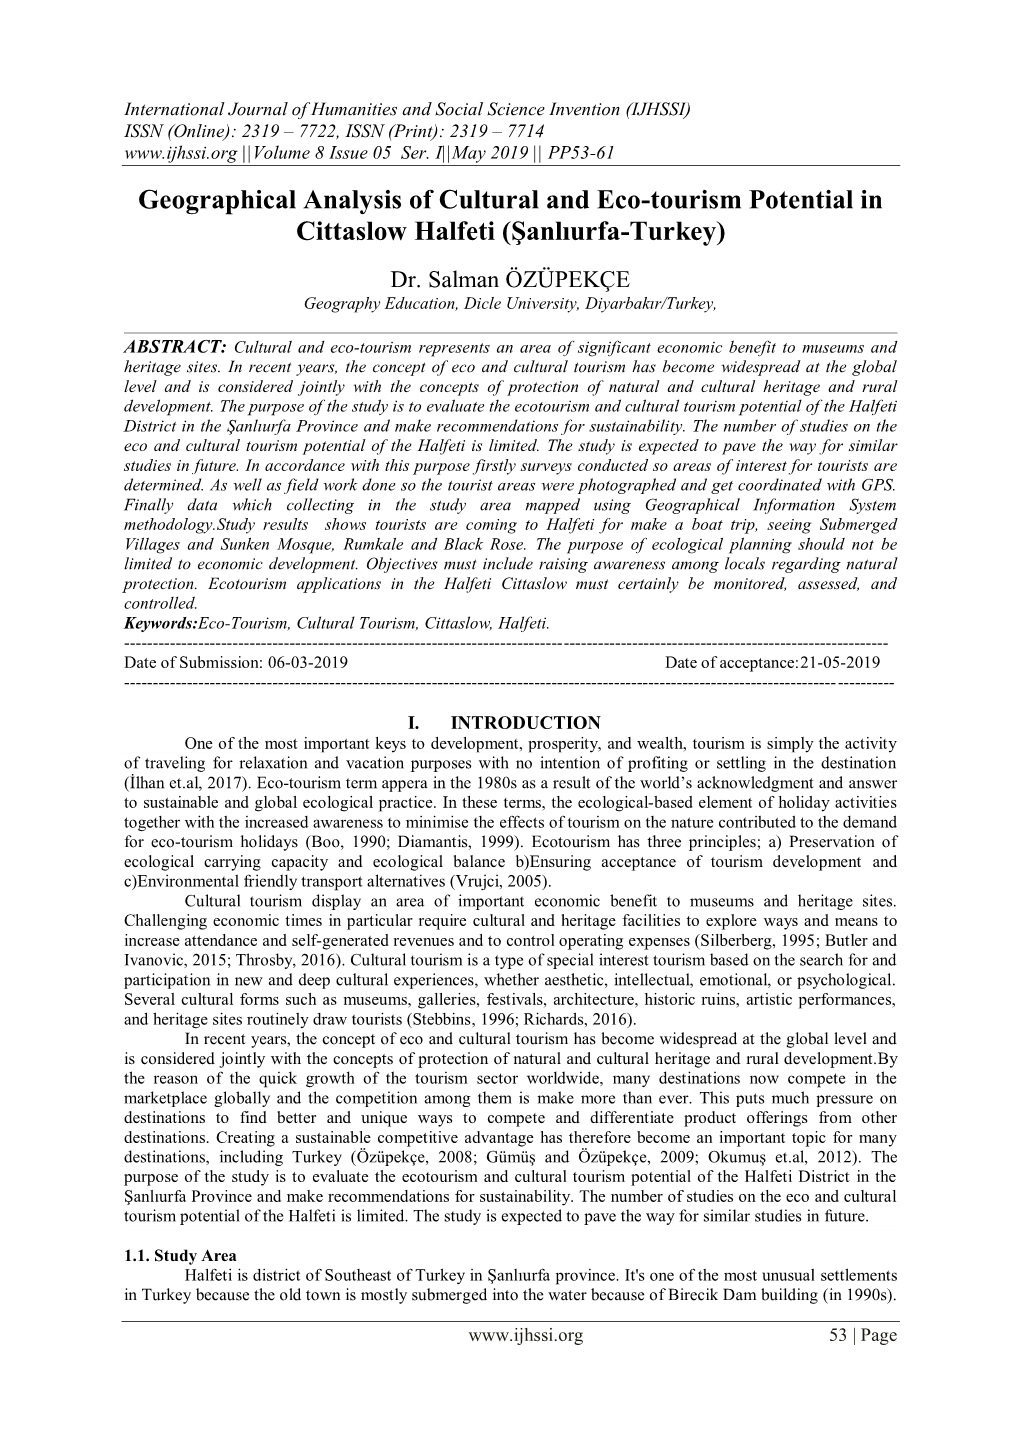 Geographical Analysis of Cultural and Eco-Tourism Potential in Cittaslow Halfeti (Şanlıurfa-Turkey)